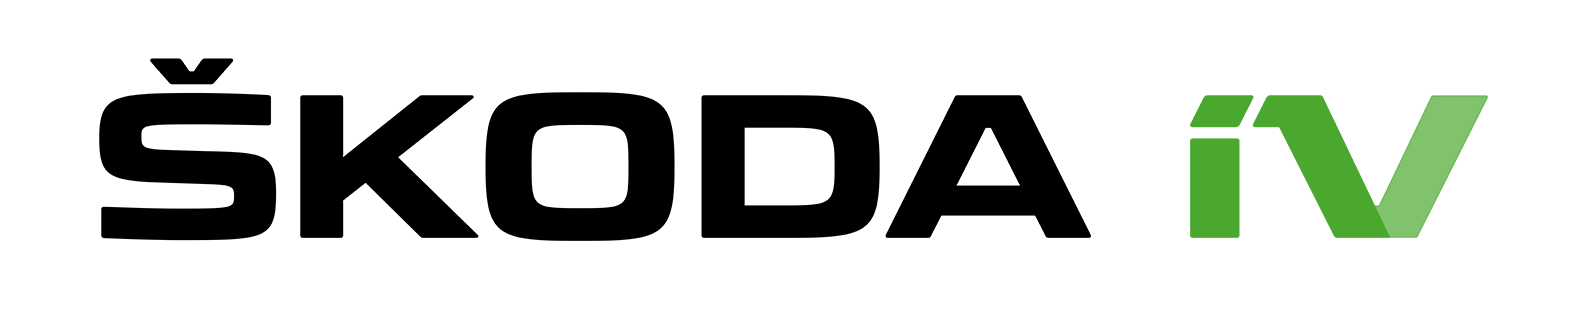 ŠKODA AUTO logo